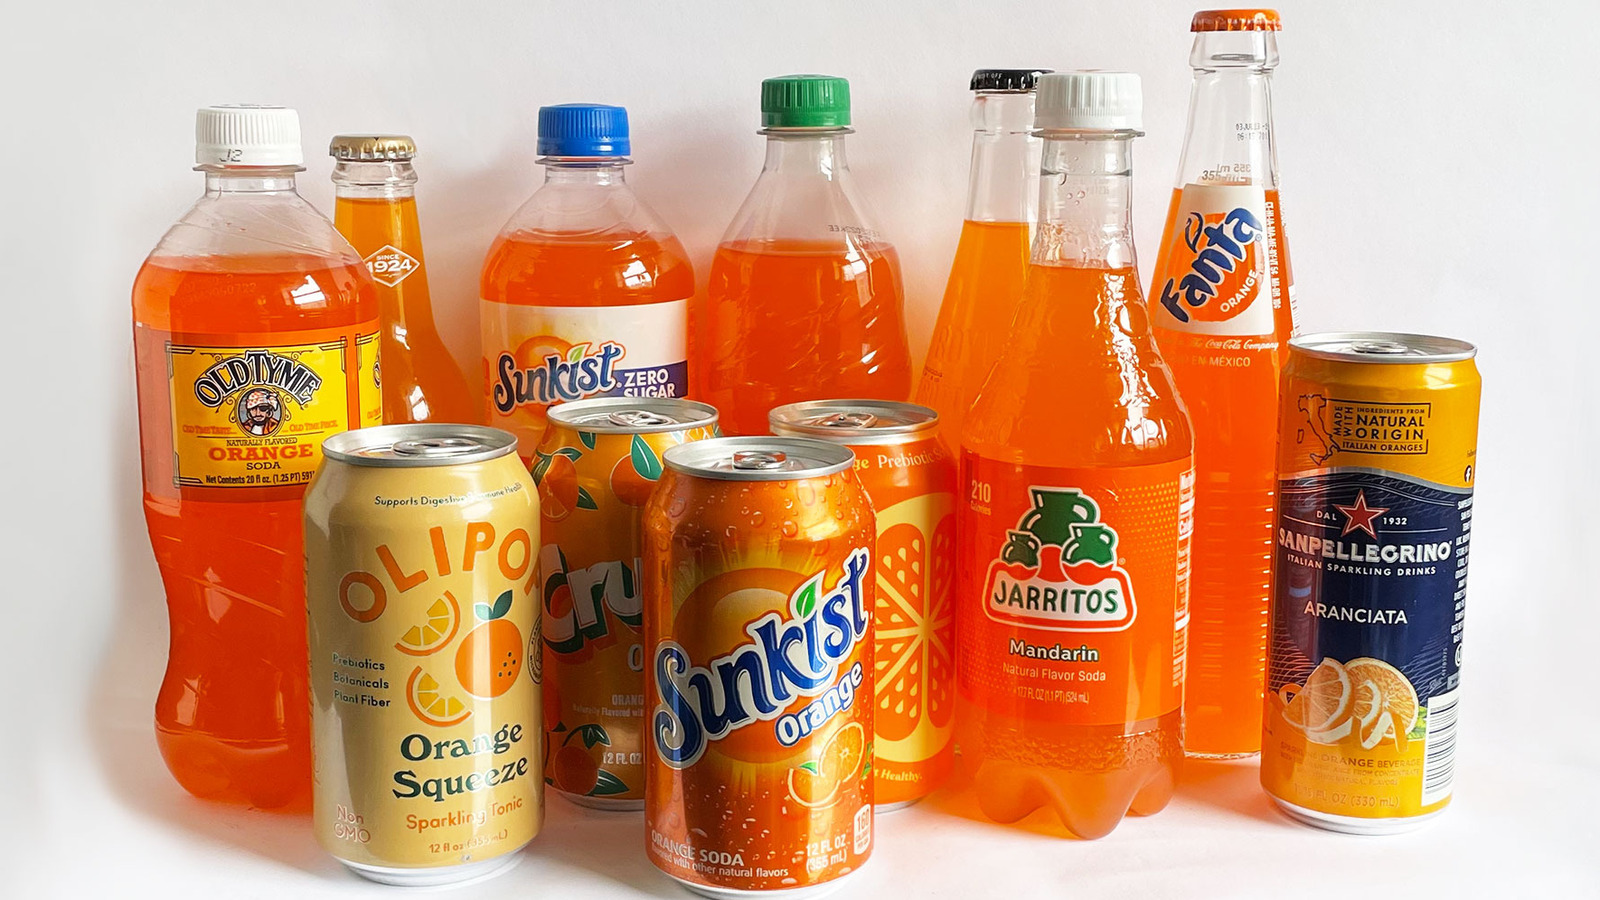 https://www.tastingtable.com/img/gallery/15-popular-orange-sodas-ranked-worst-to-best/l-intro-1677622868.jpg